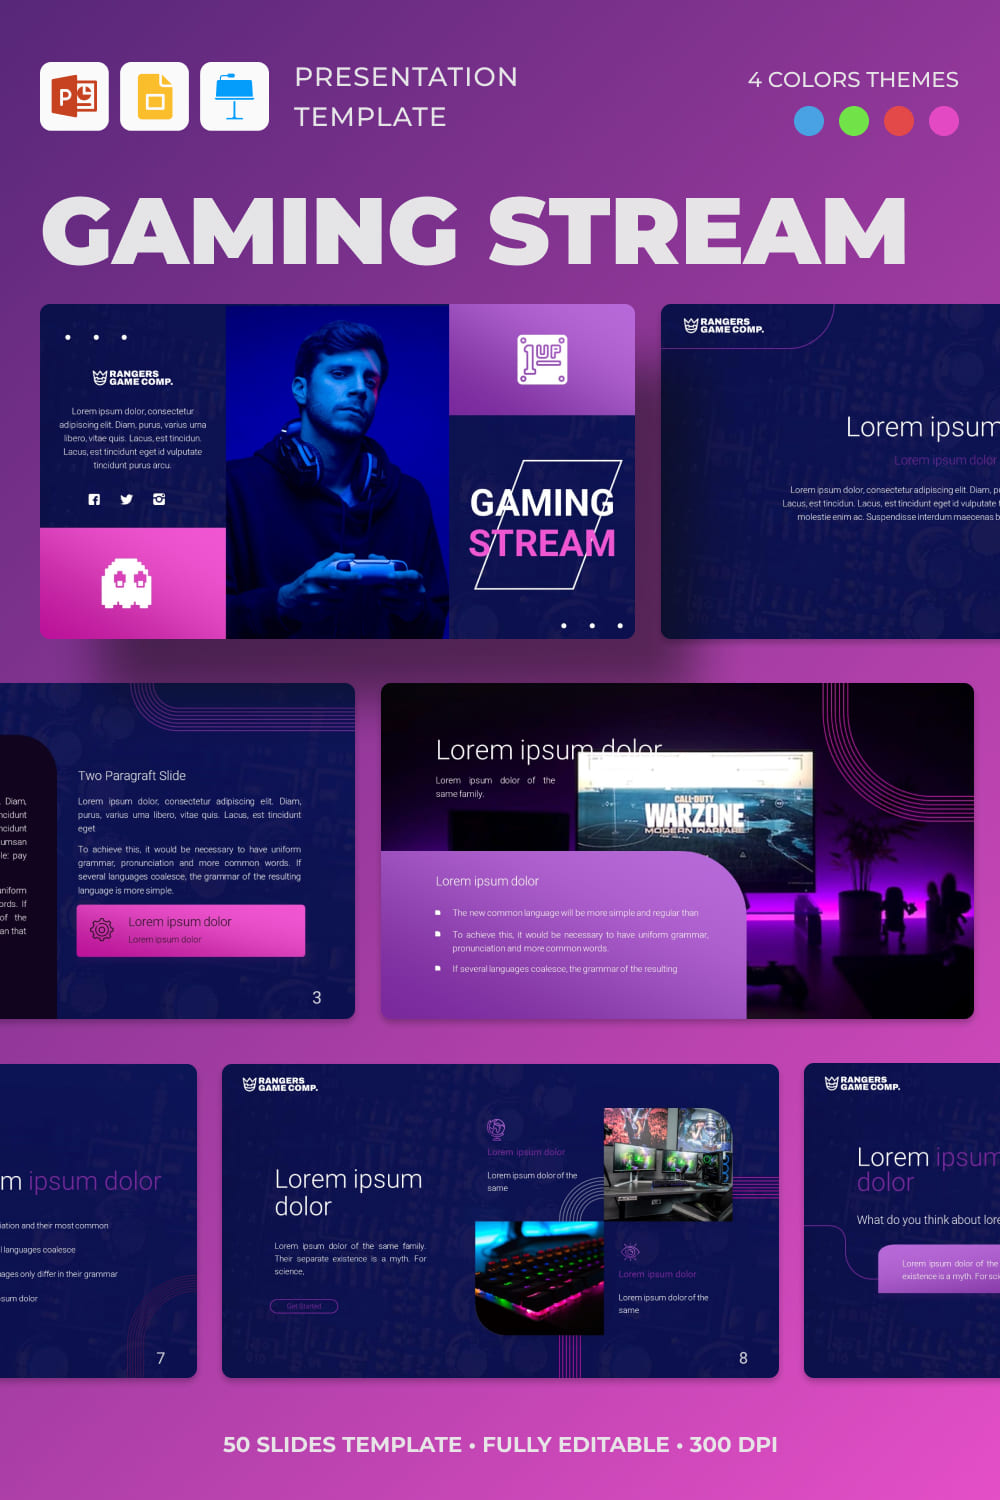 Gaming Stream Presentation Template - Pinterest.